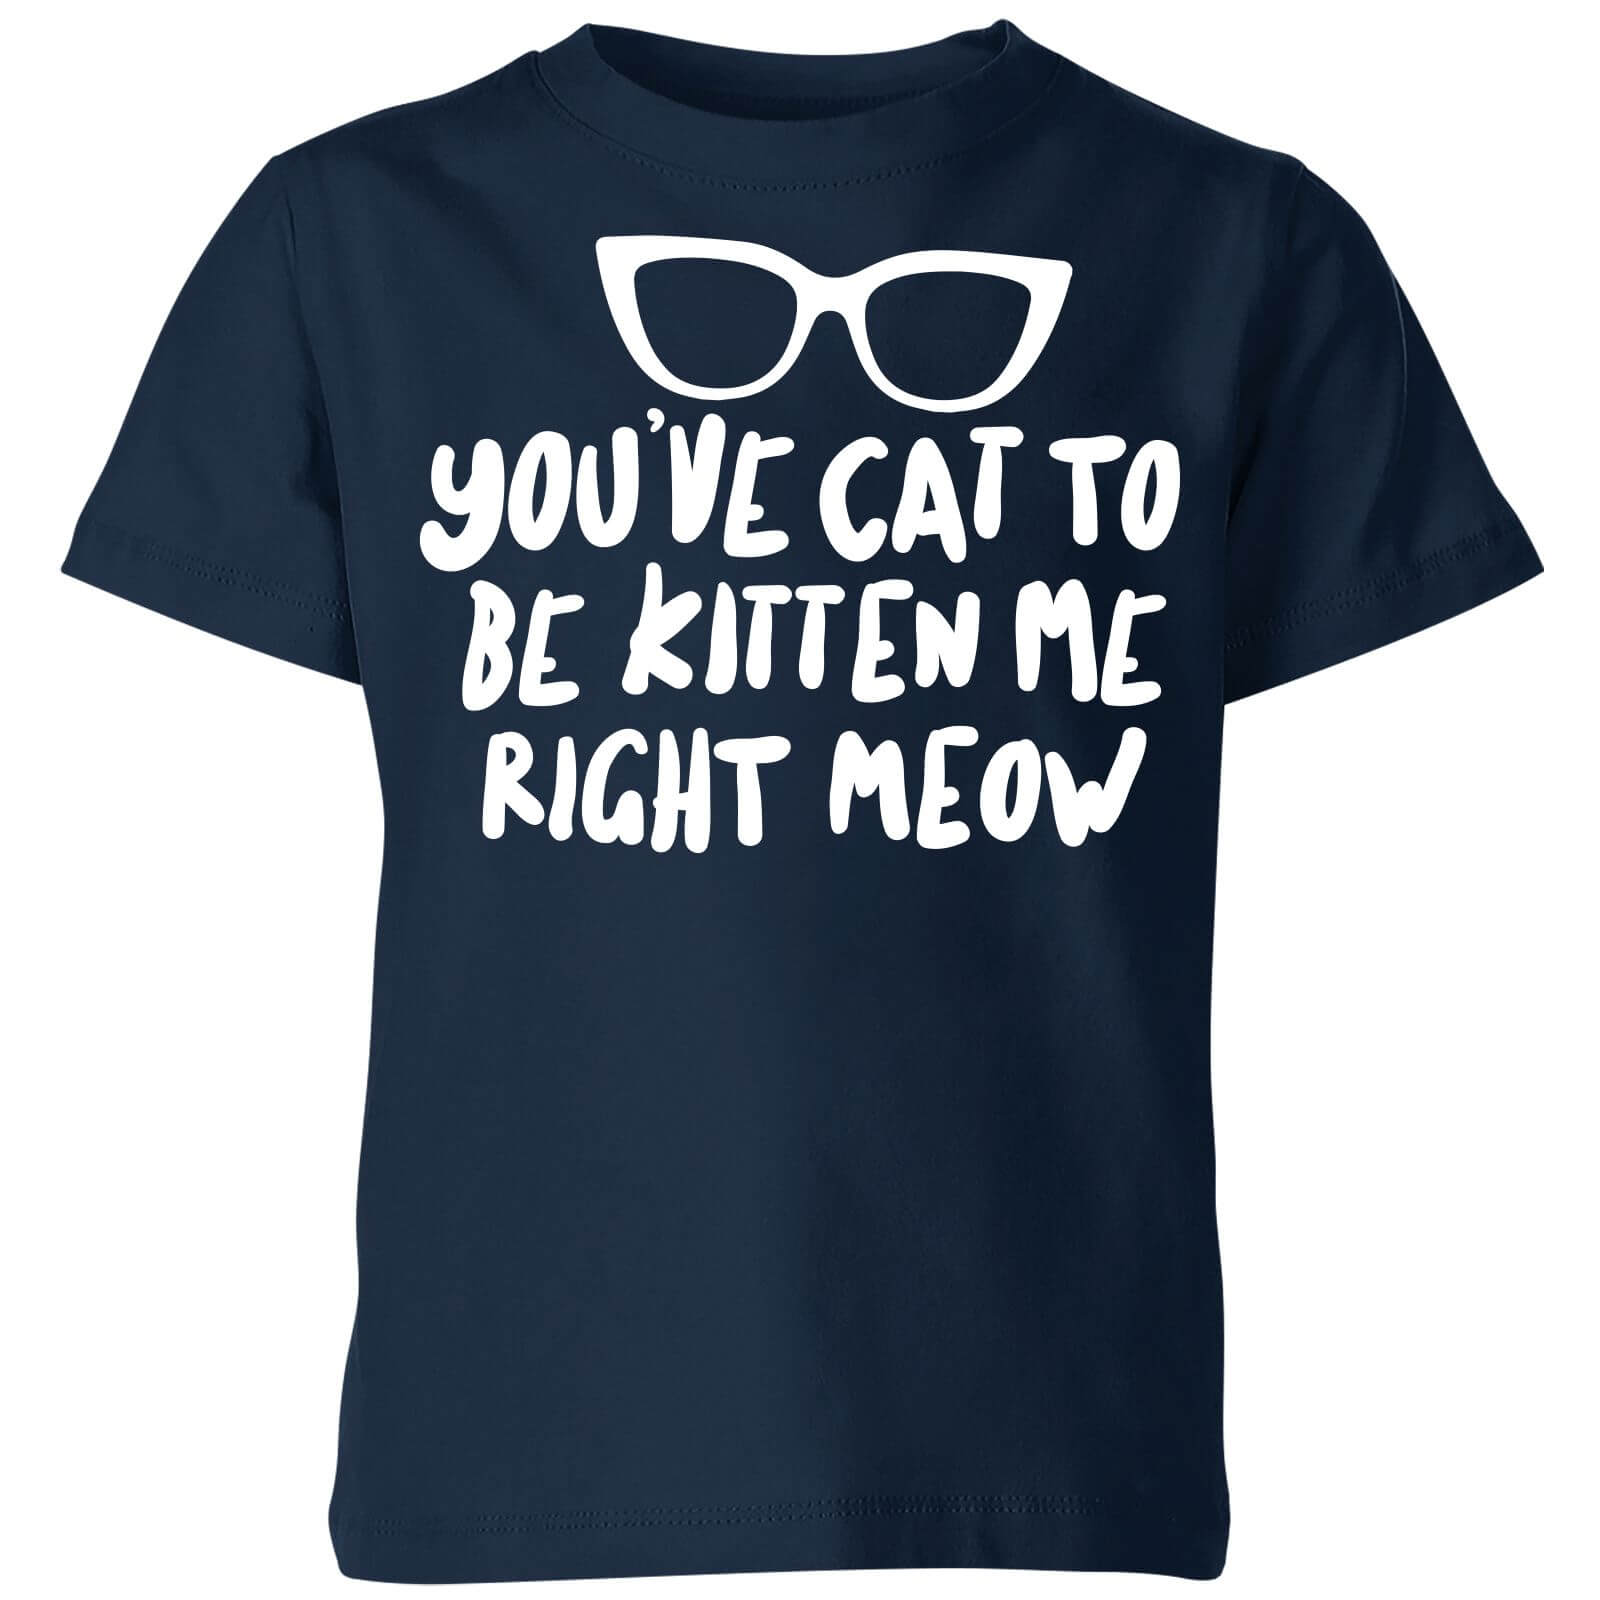 You've Cat To Be Kitten Me Kids' T-Shirt - Navy - 3-4 Years - Navy